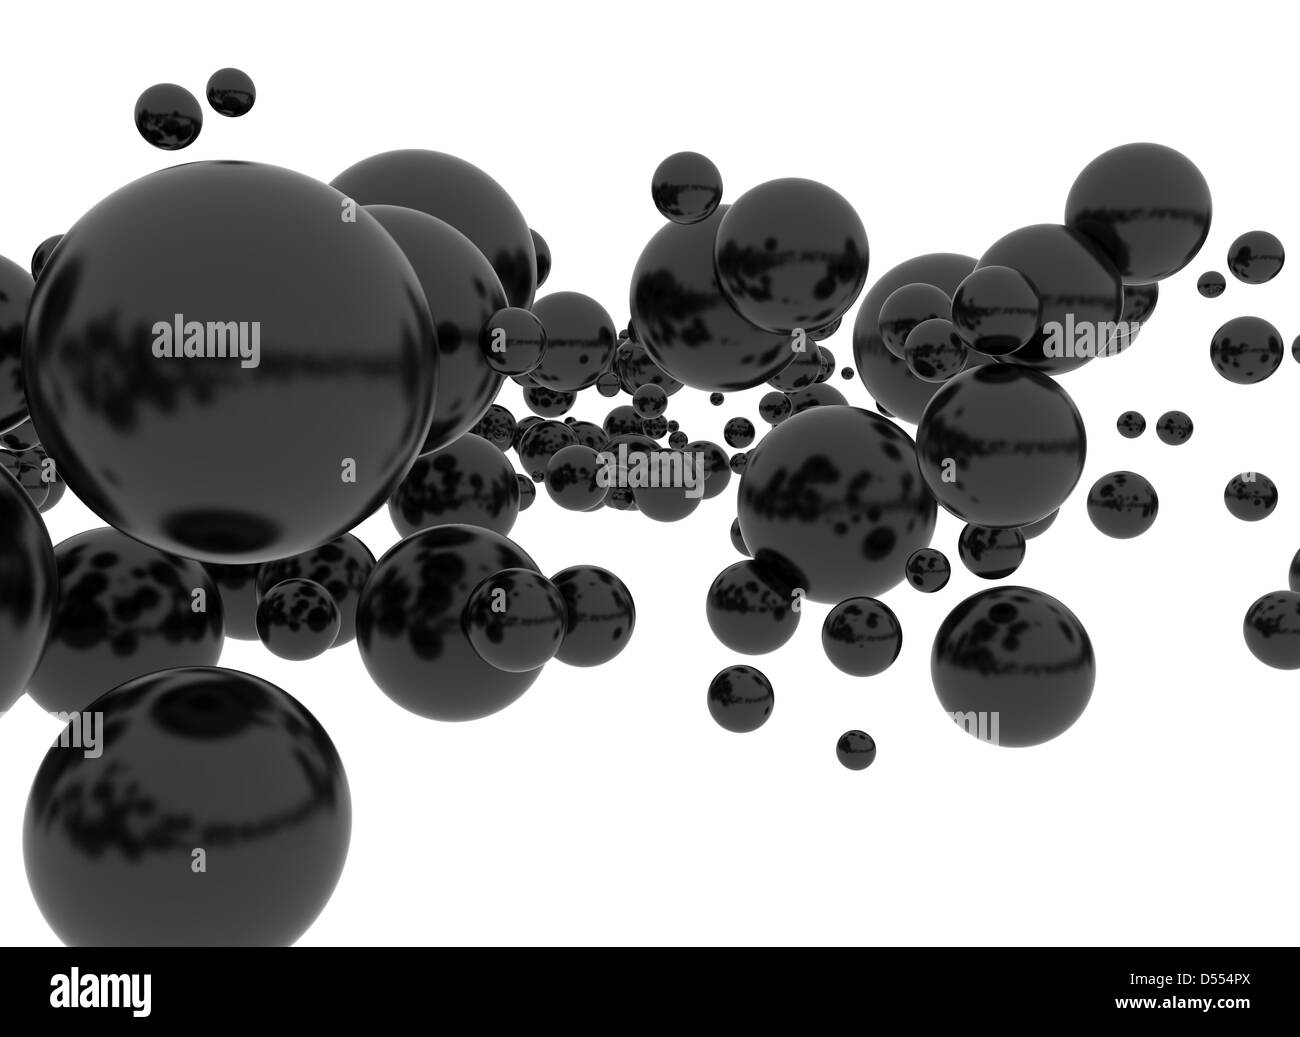 Black 3d spheres abstract digital design Stock Photo